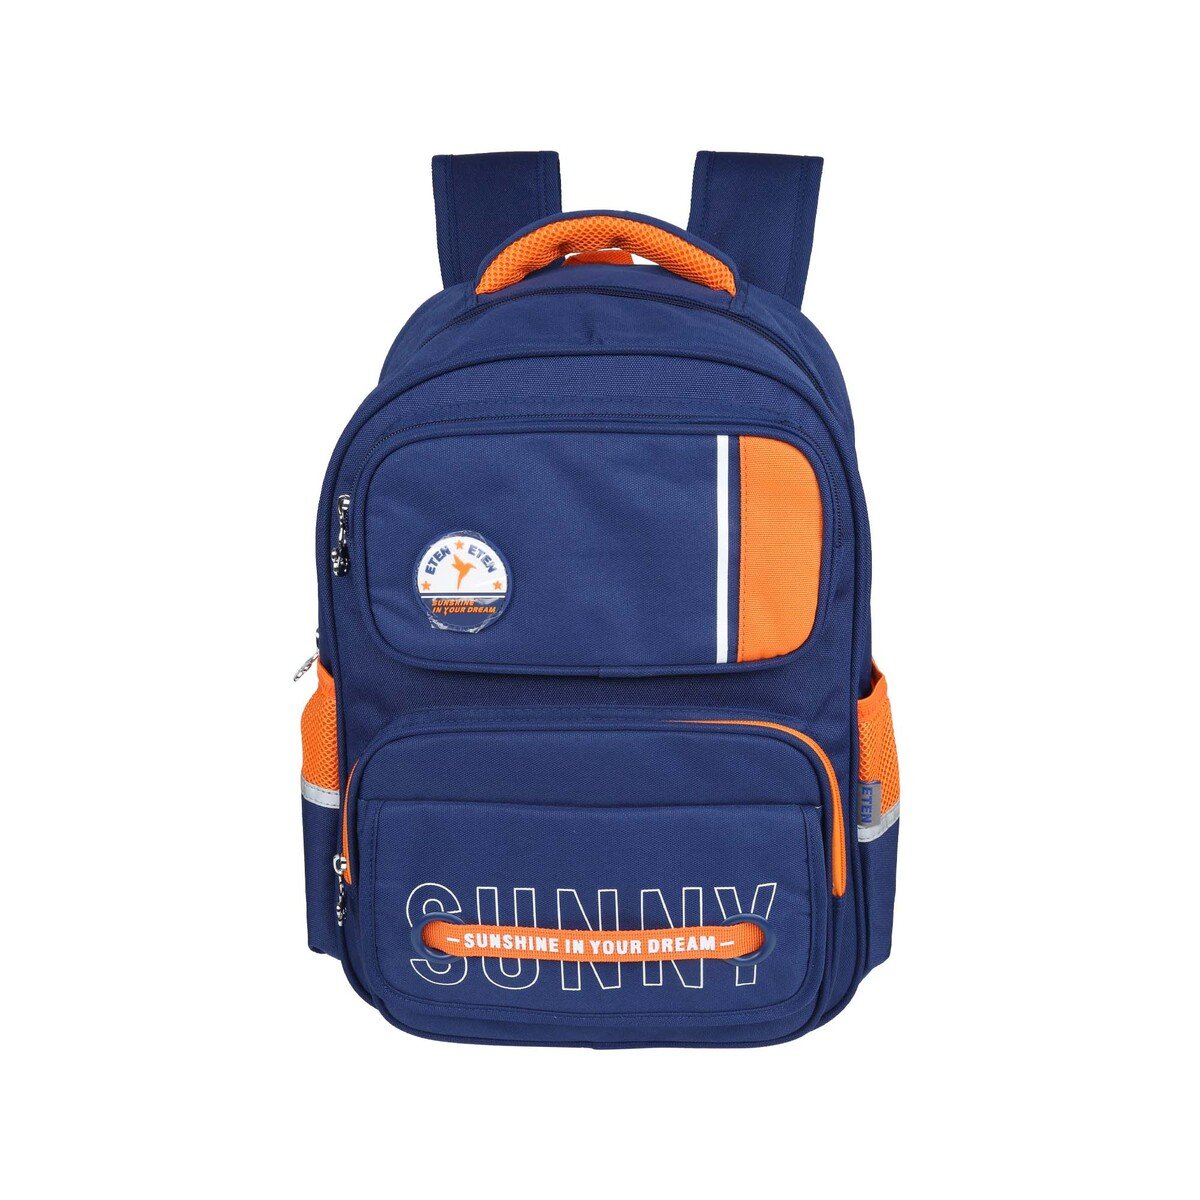 Eten Elementary Backpack 22011 15inch Assorted